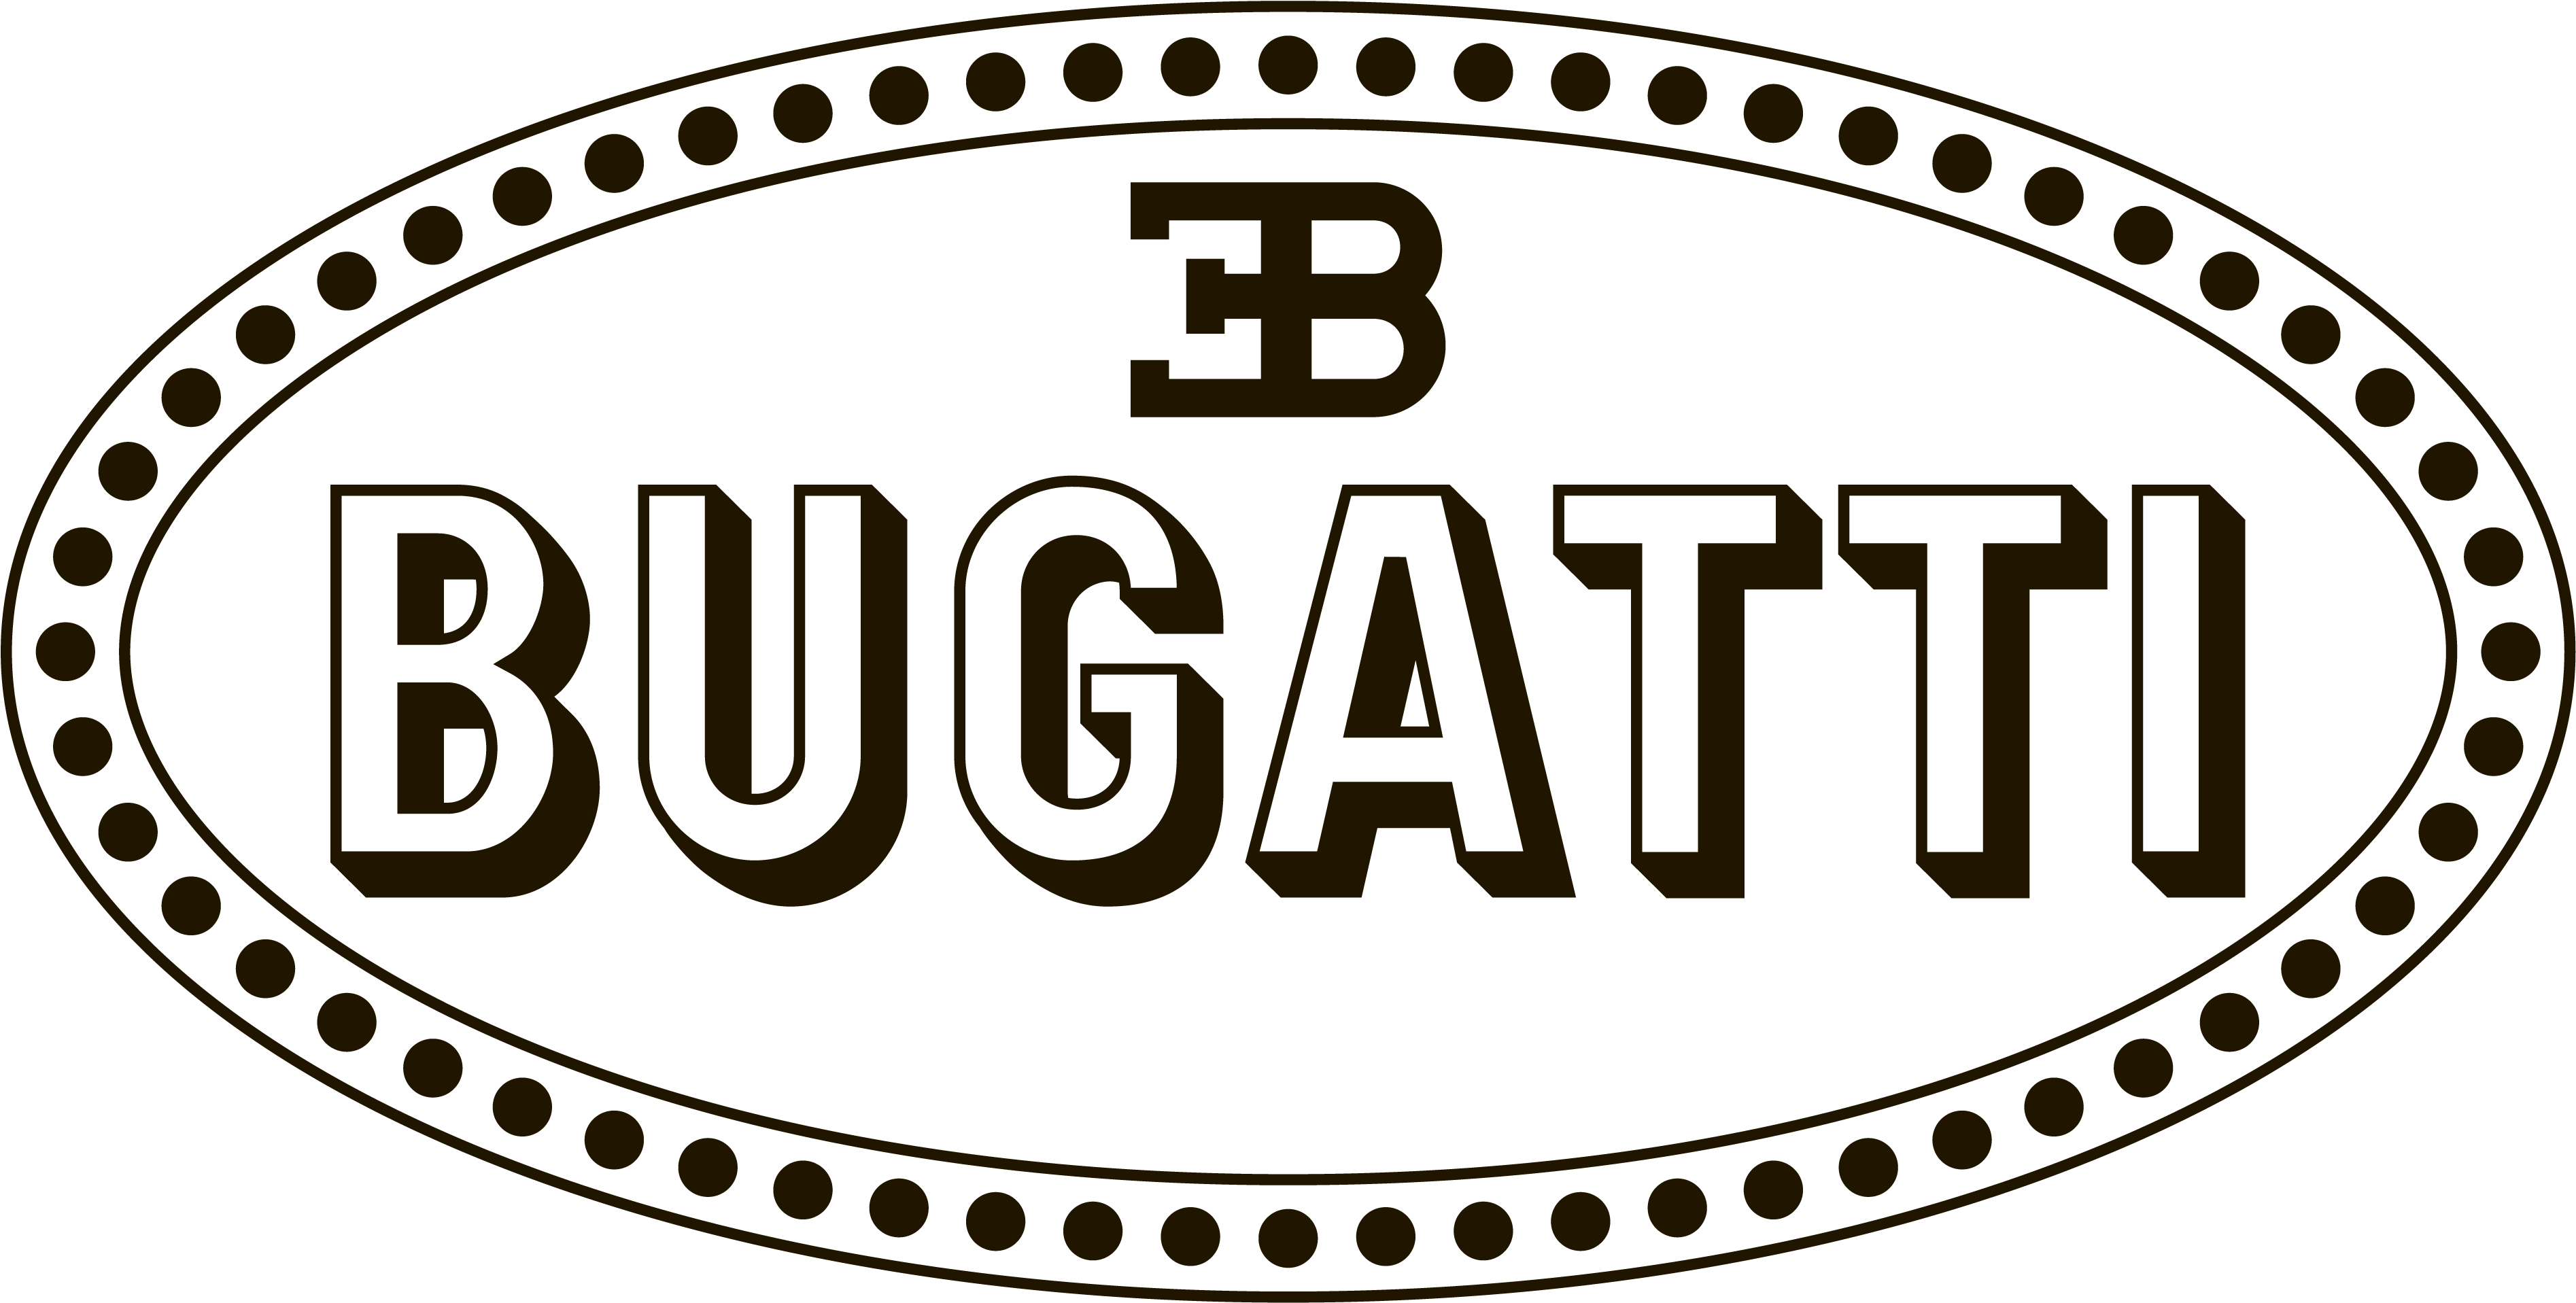 बुगाटी